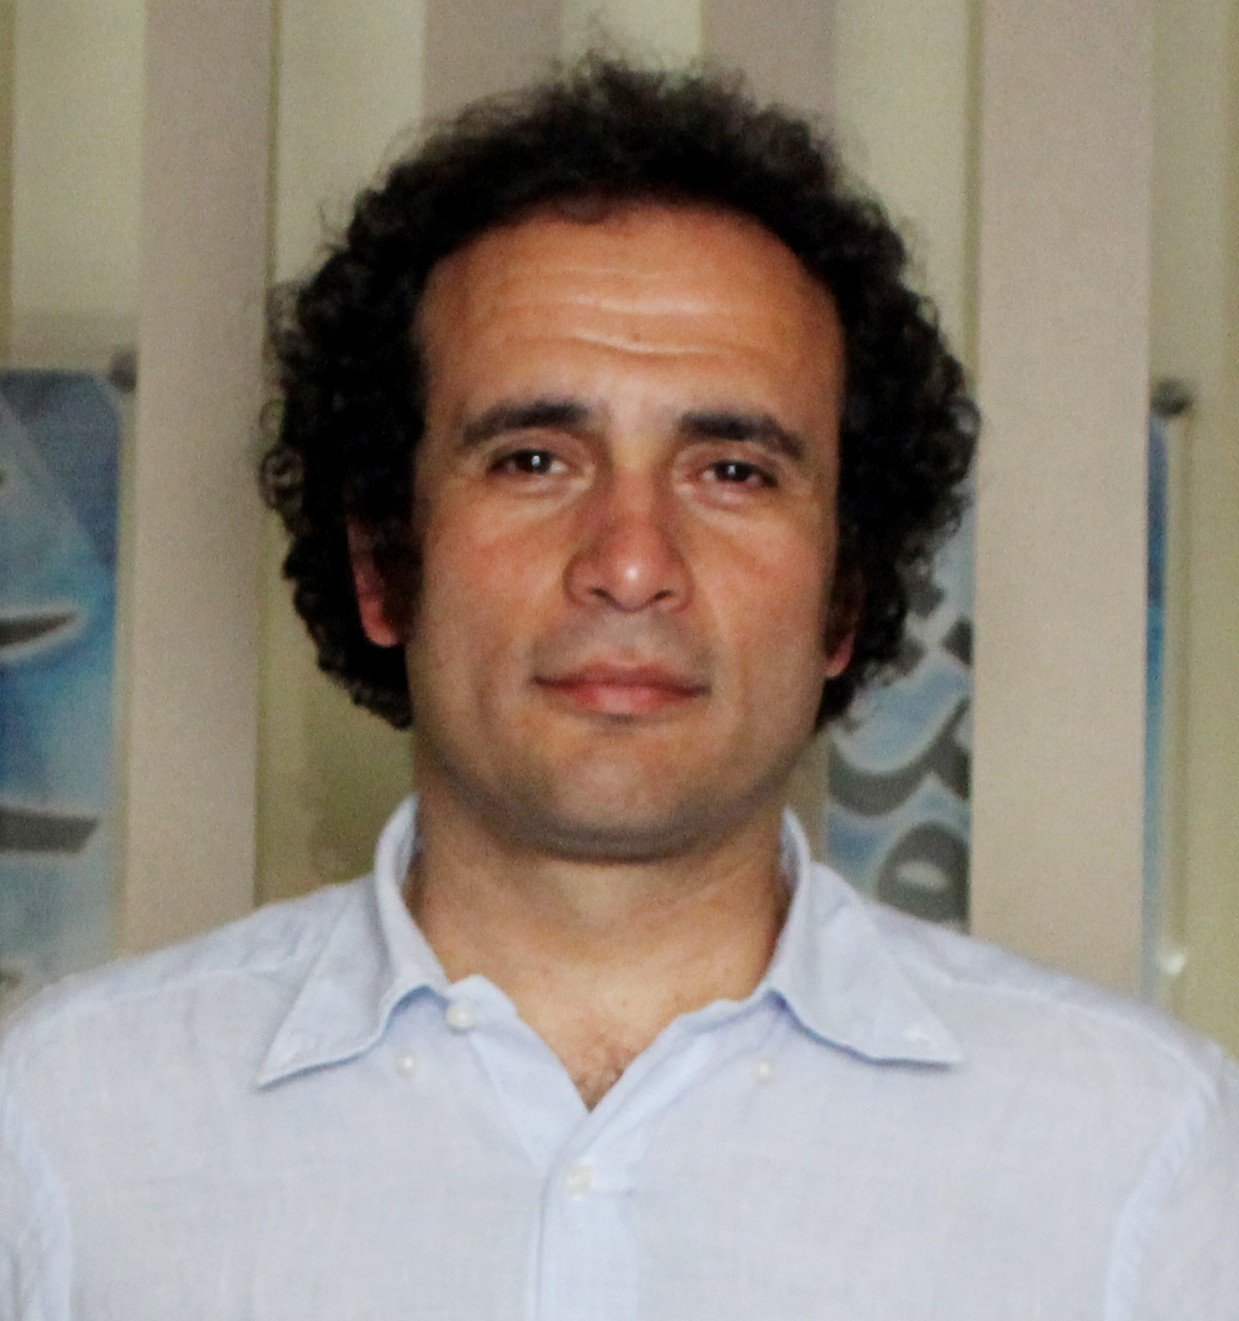  Dr. Amr Hamzawy 